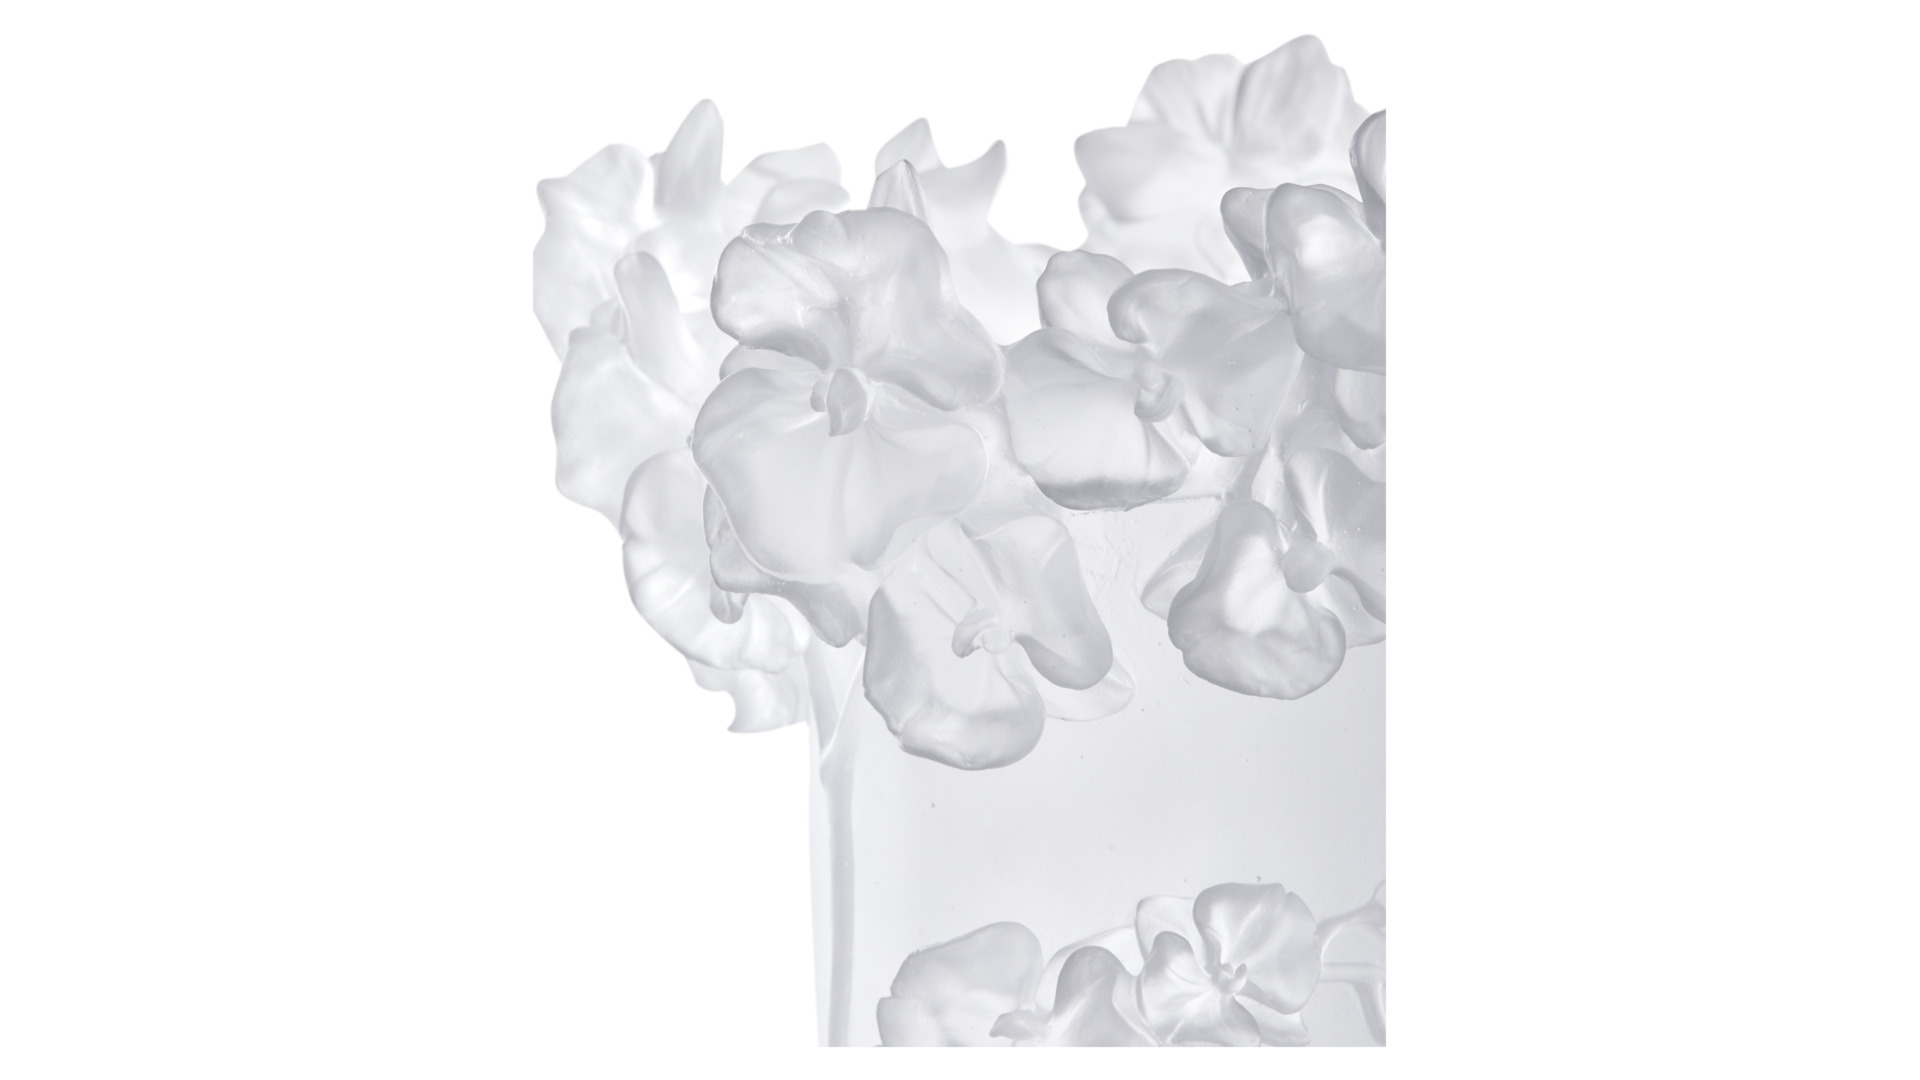 Ваза Decor de table Орхидея 30 см, хрусталь, белая